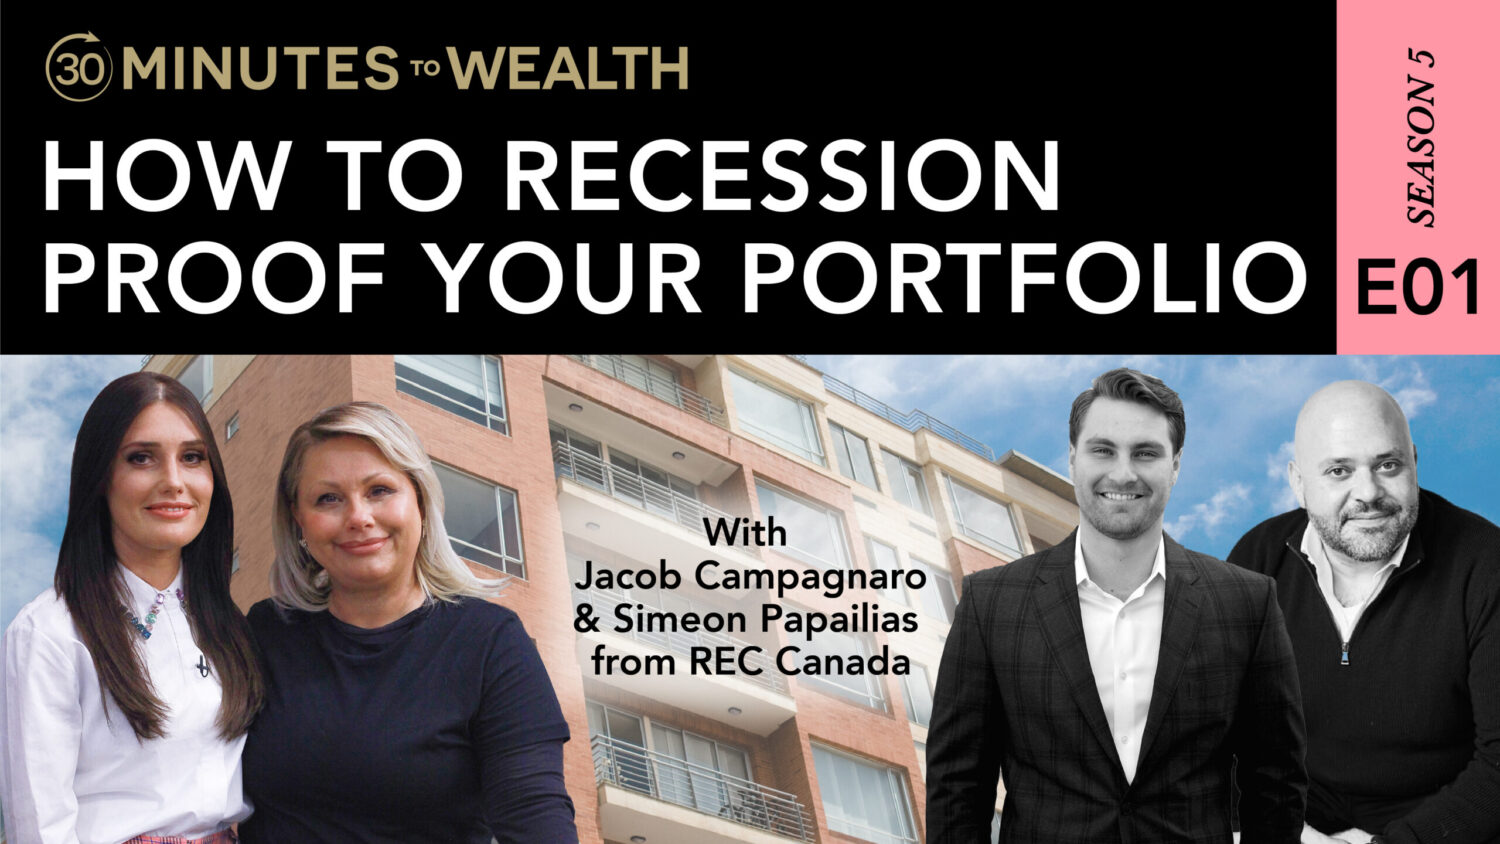 S5 E01 - How to Recession Proof Your Portfolio with REC Canada